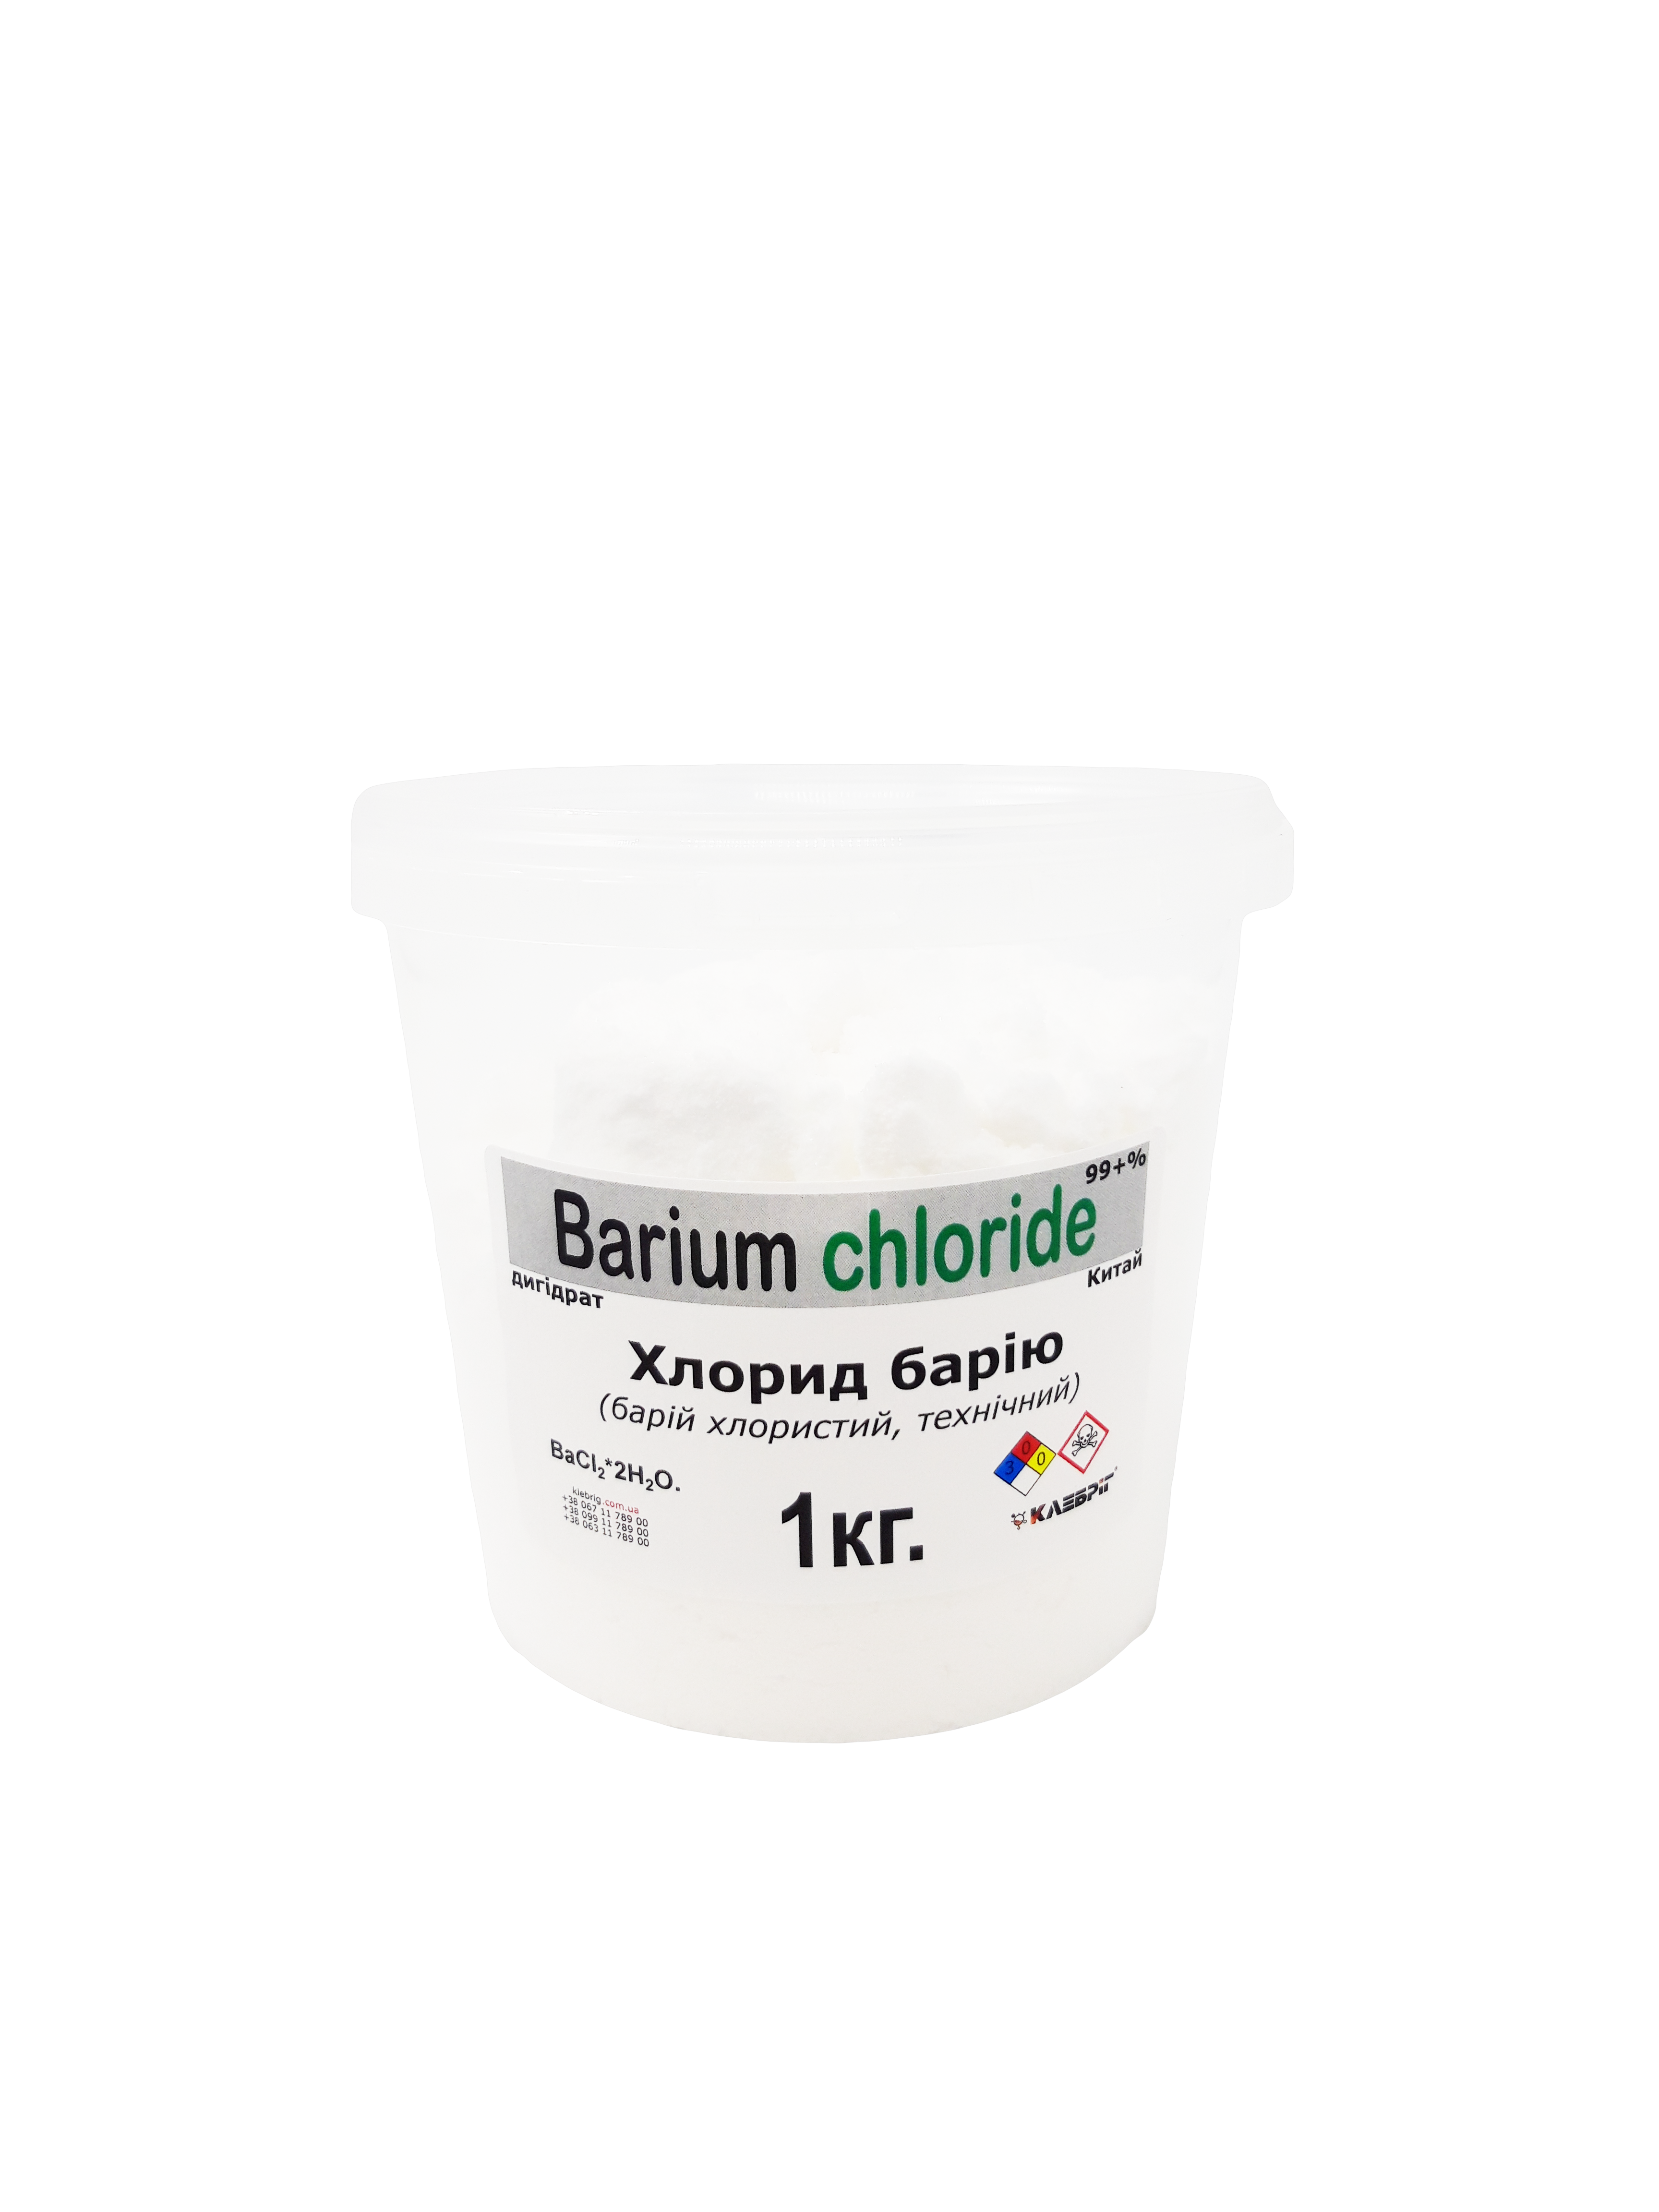 Бария хлорид Klebrig барий хлористый 2- водный технический 1 кг БАР.Хл-В-1